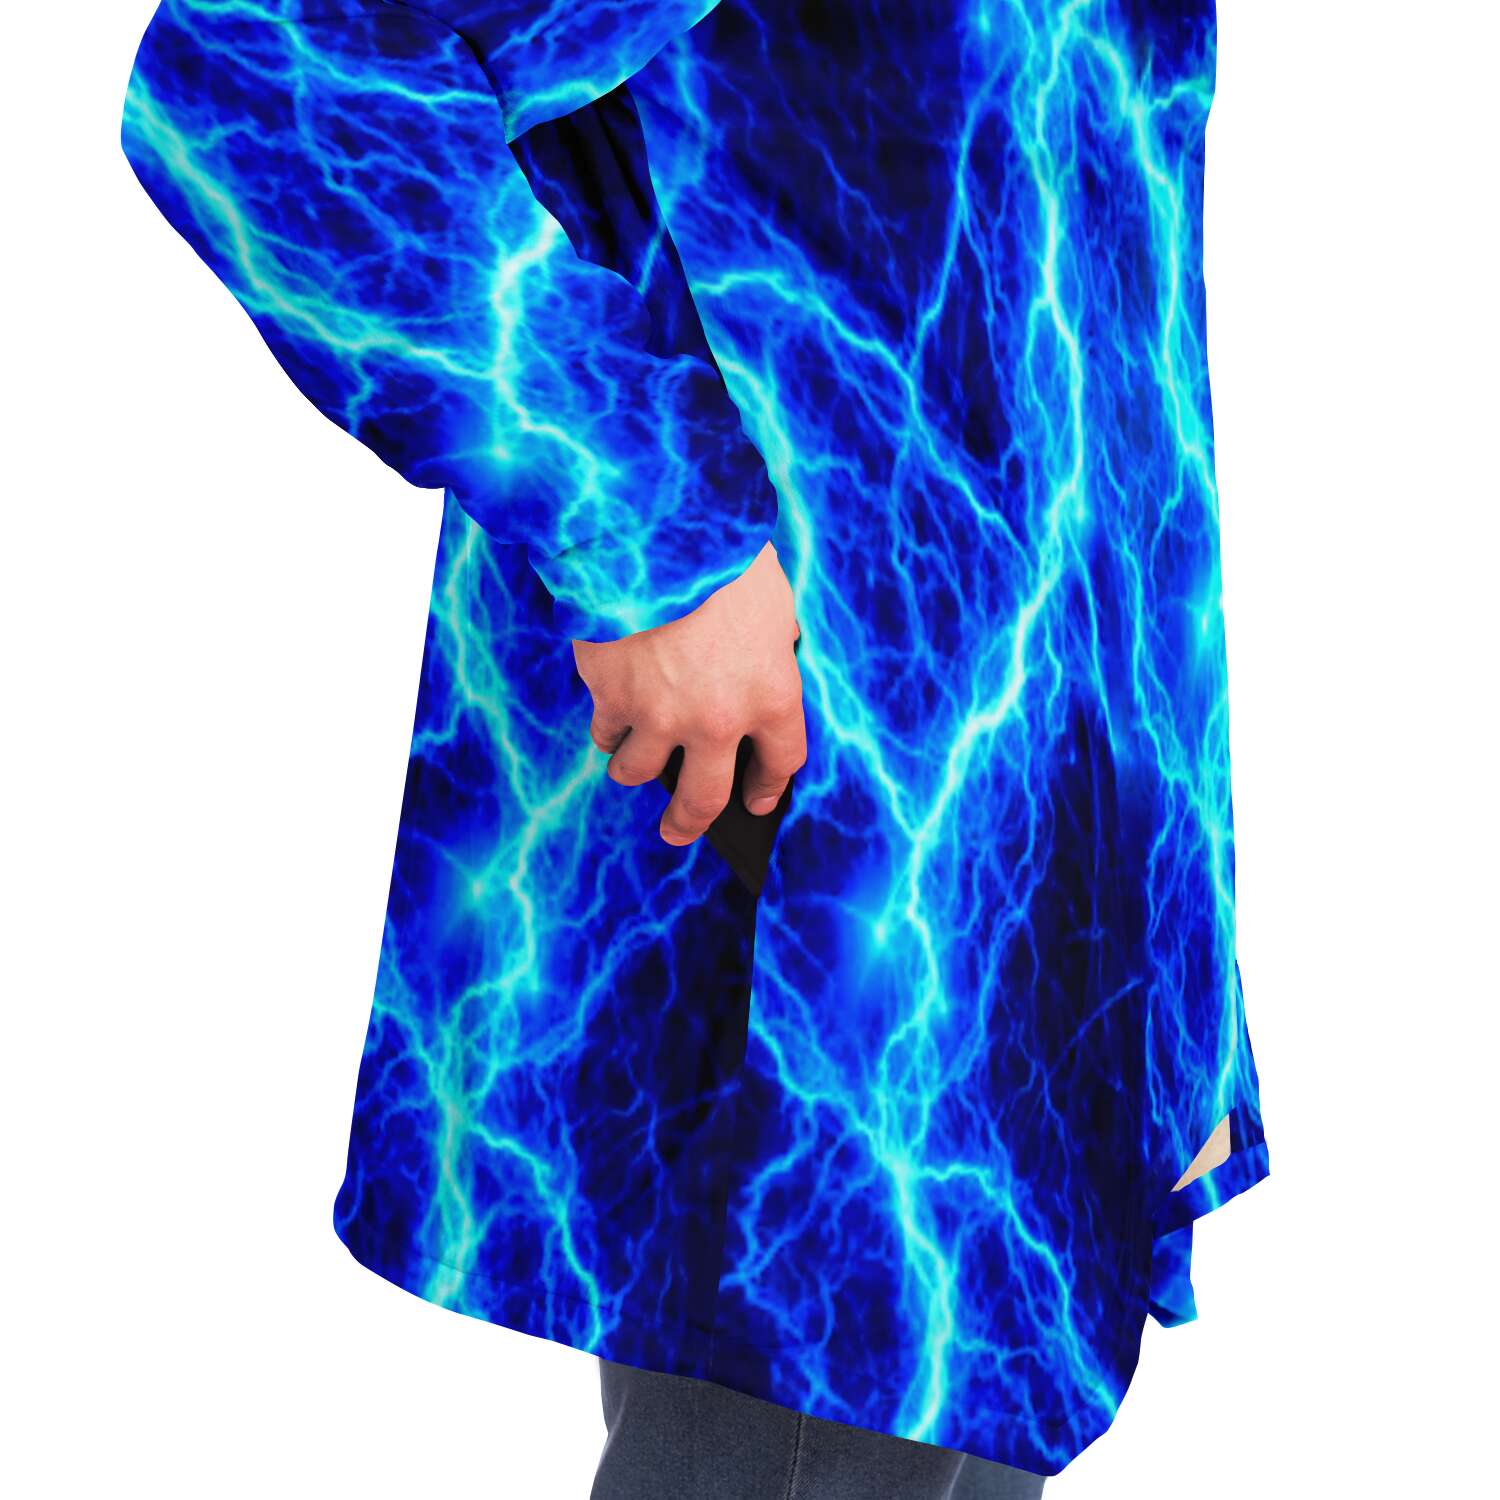 Blue Lightning Cloak